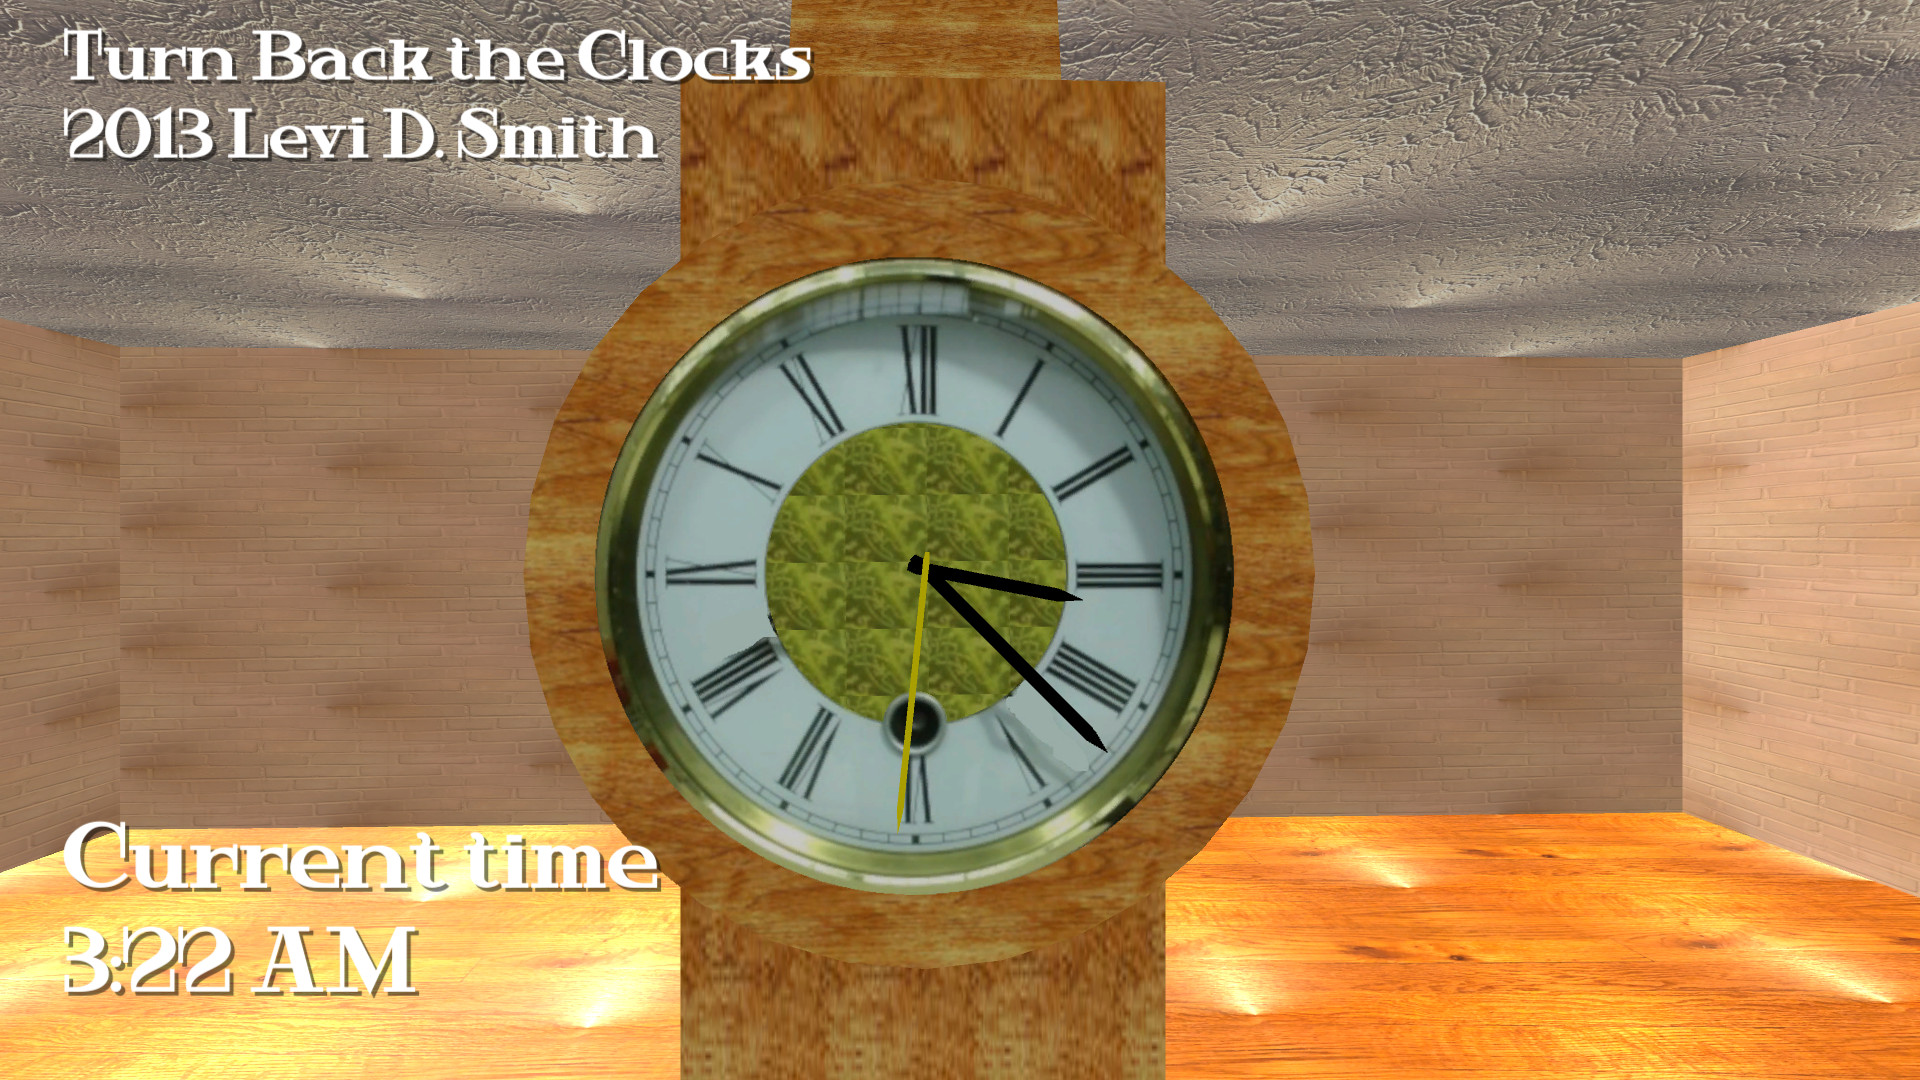 clocks back